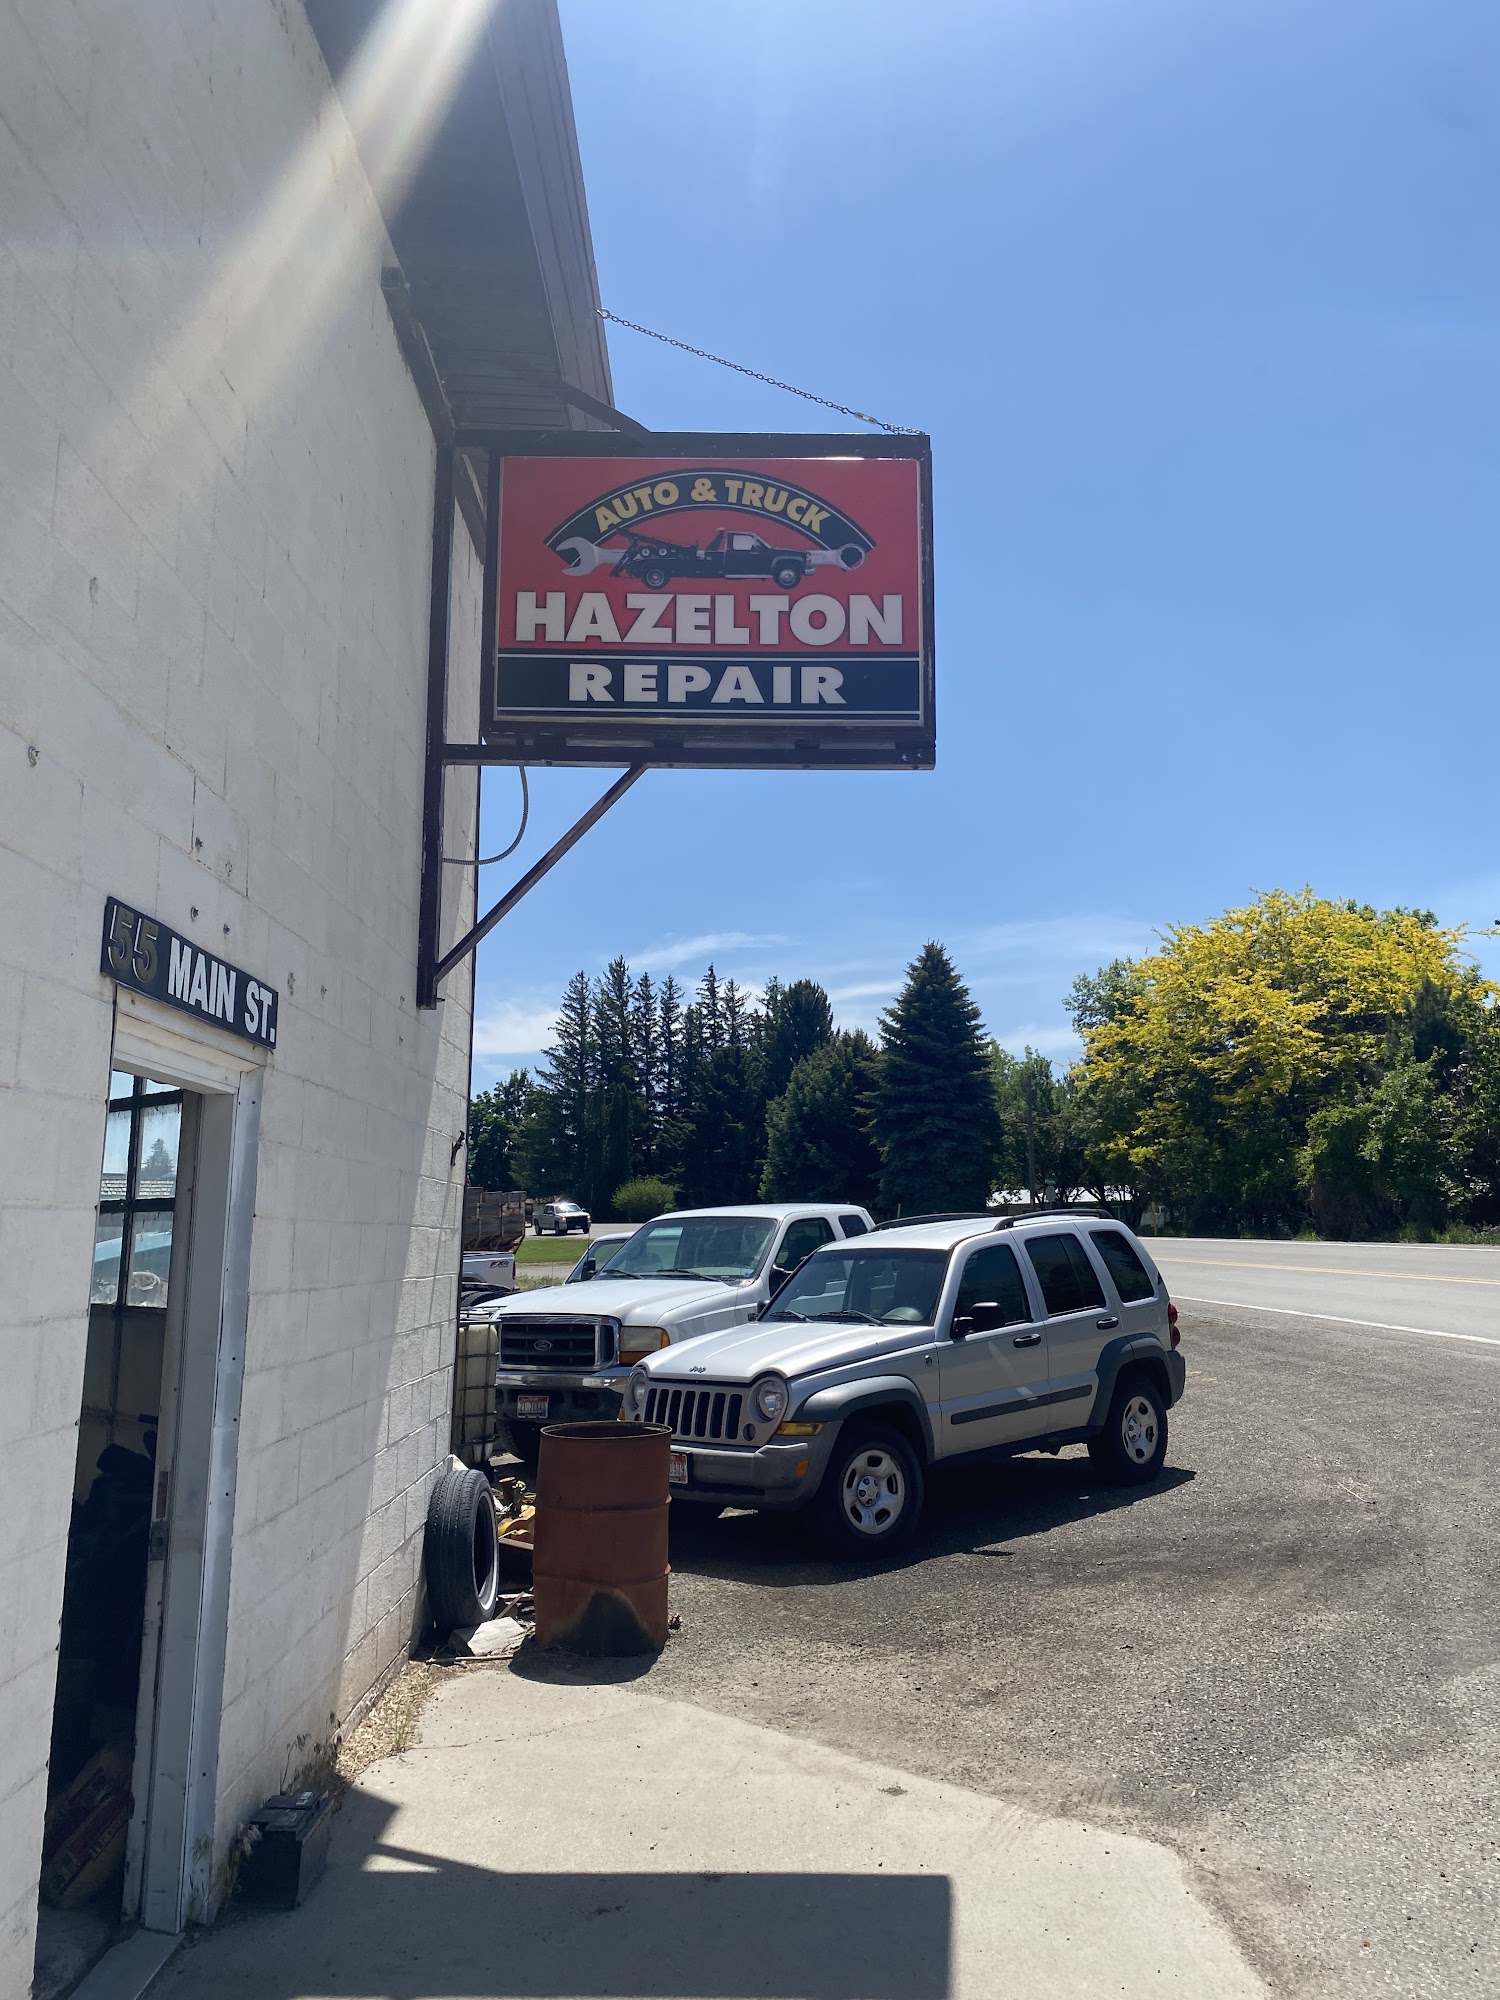 Hazelton Repair 55 Main St, Hazelton Idaho 83335